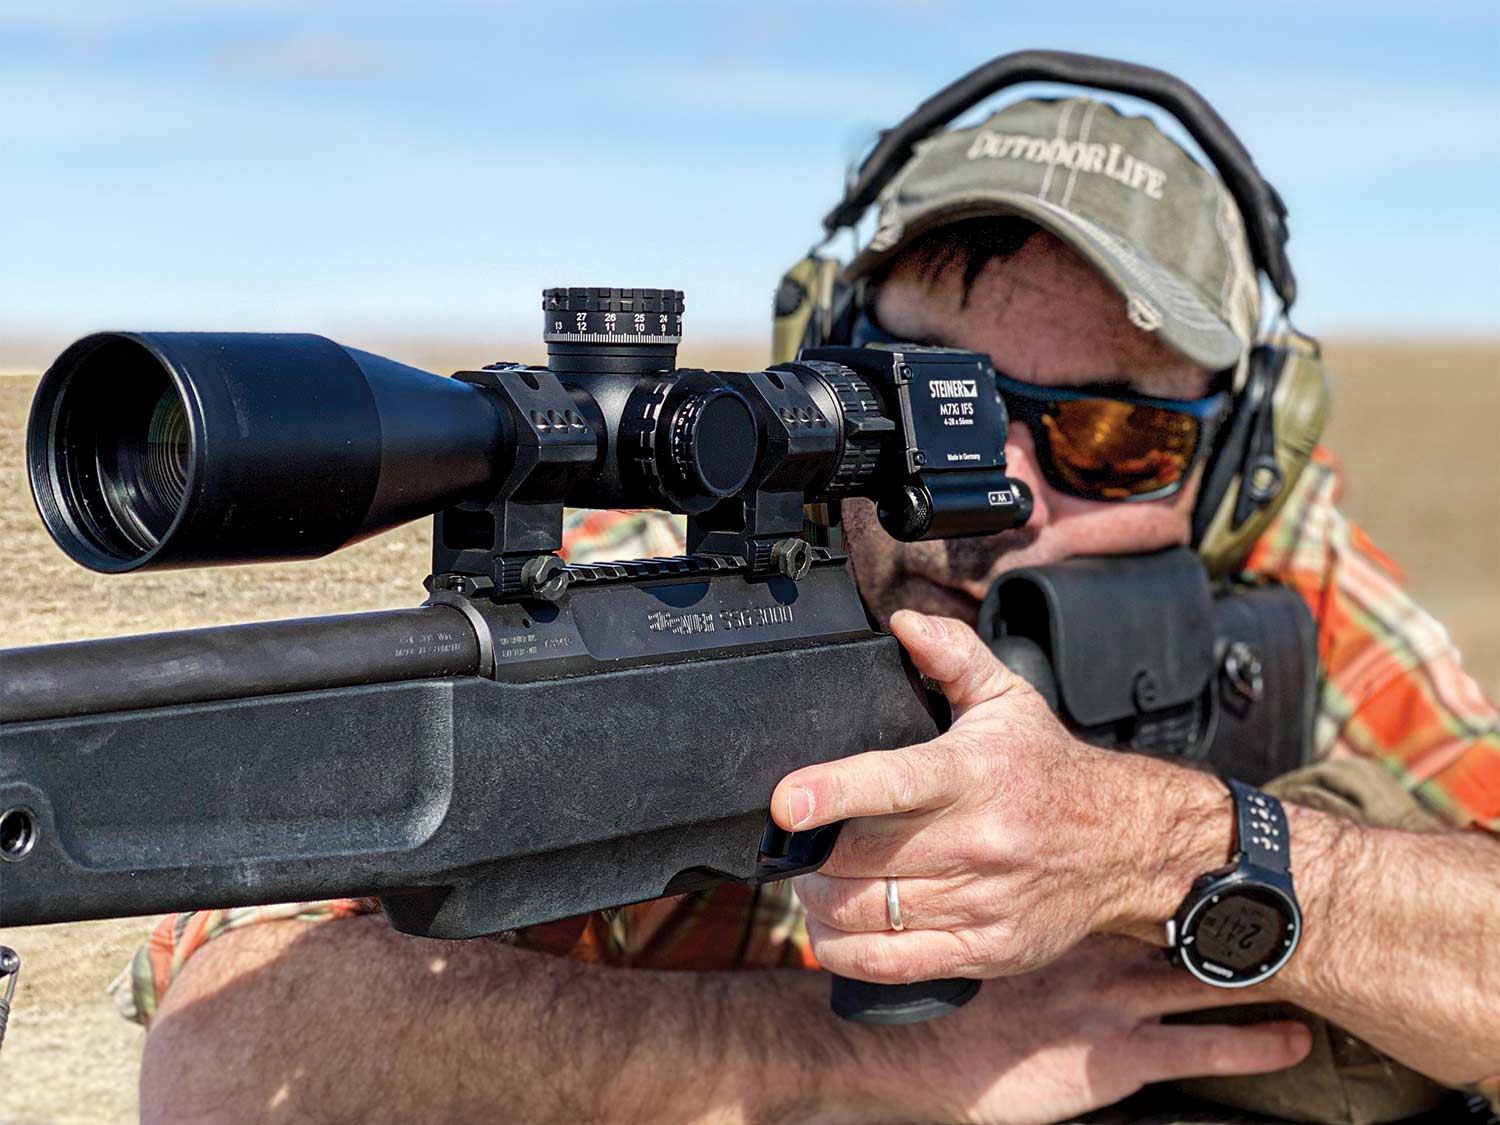 A man in a ball cap aims a rifle and looks through the rifle scope.